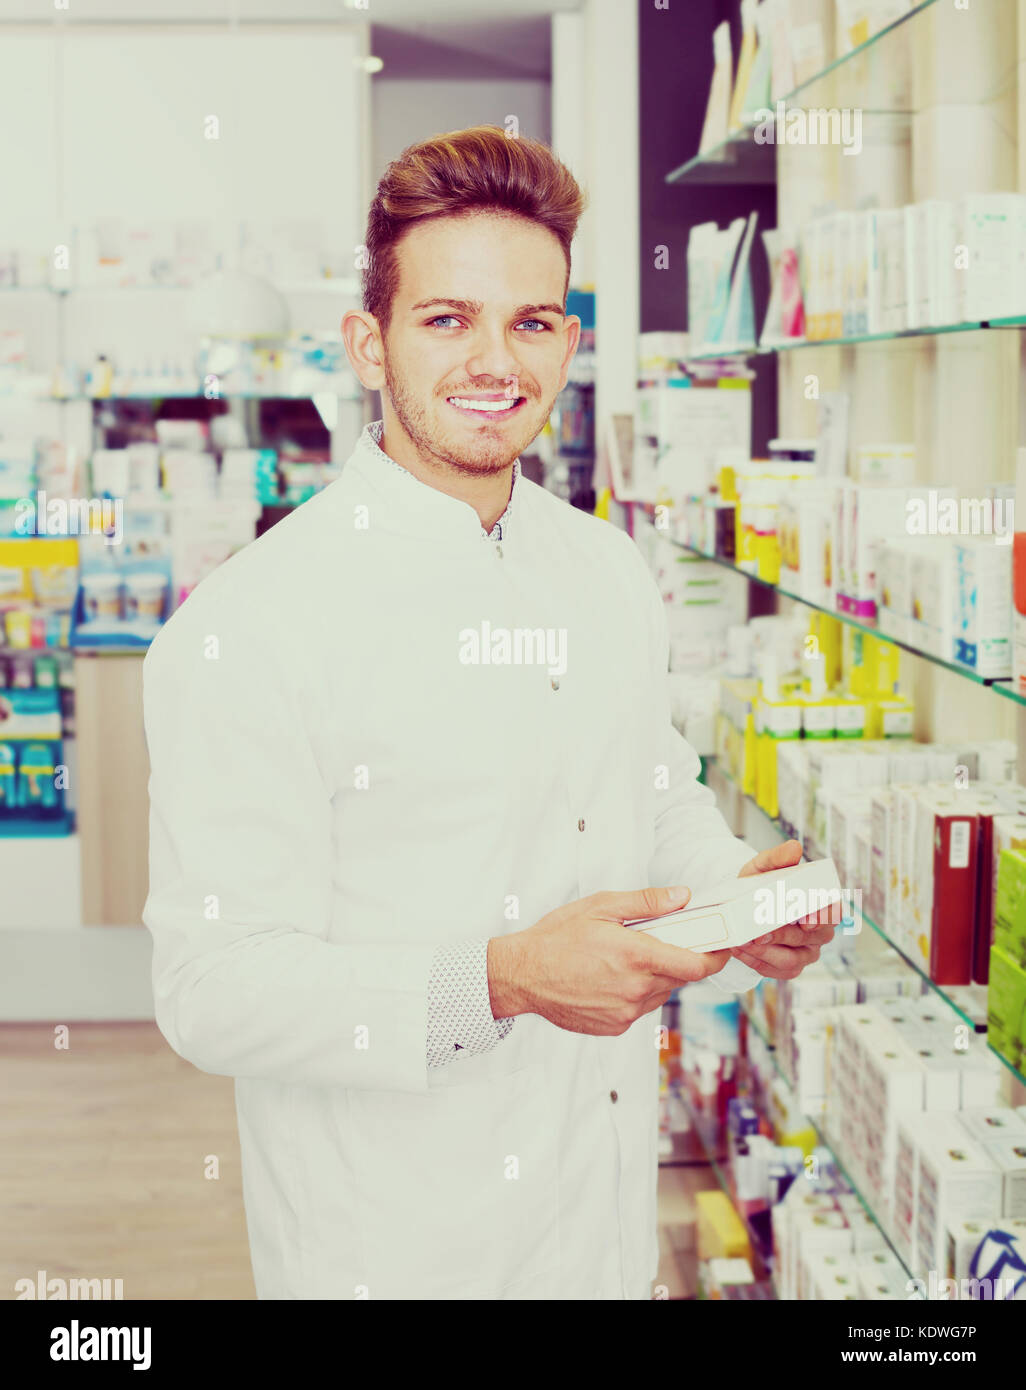 Smiling positive male pharmacist wearing white coat standing among ...